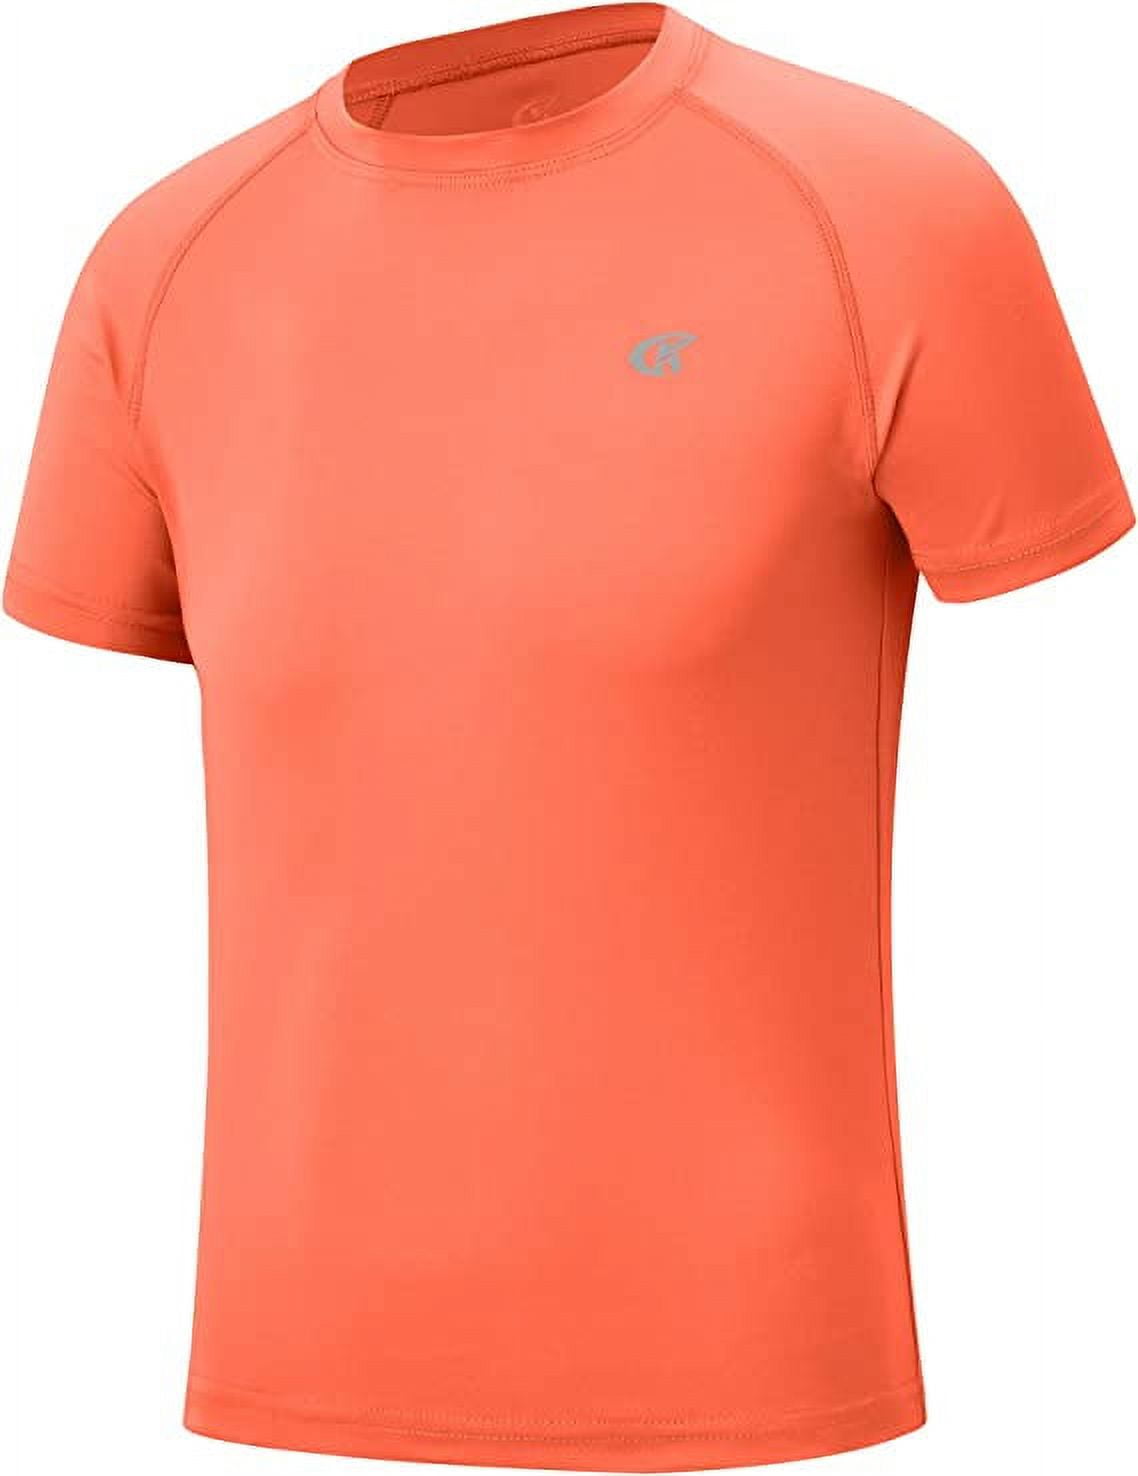 YuKaiChen Boys UPF 50+ Rash Guard Swim Shirt Youth Short Sleeve Hiking  Shirts Quick Dry Fishing Tee Tops Orange L